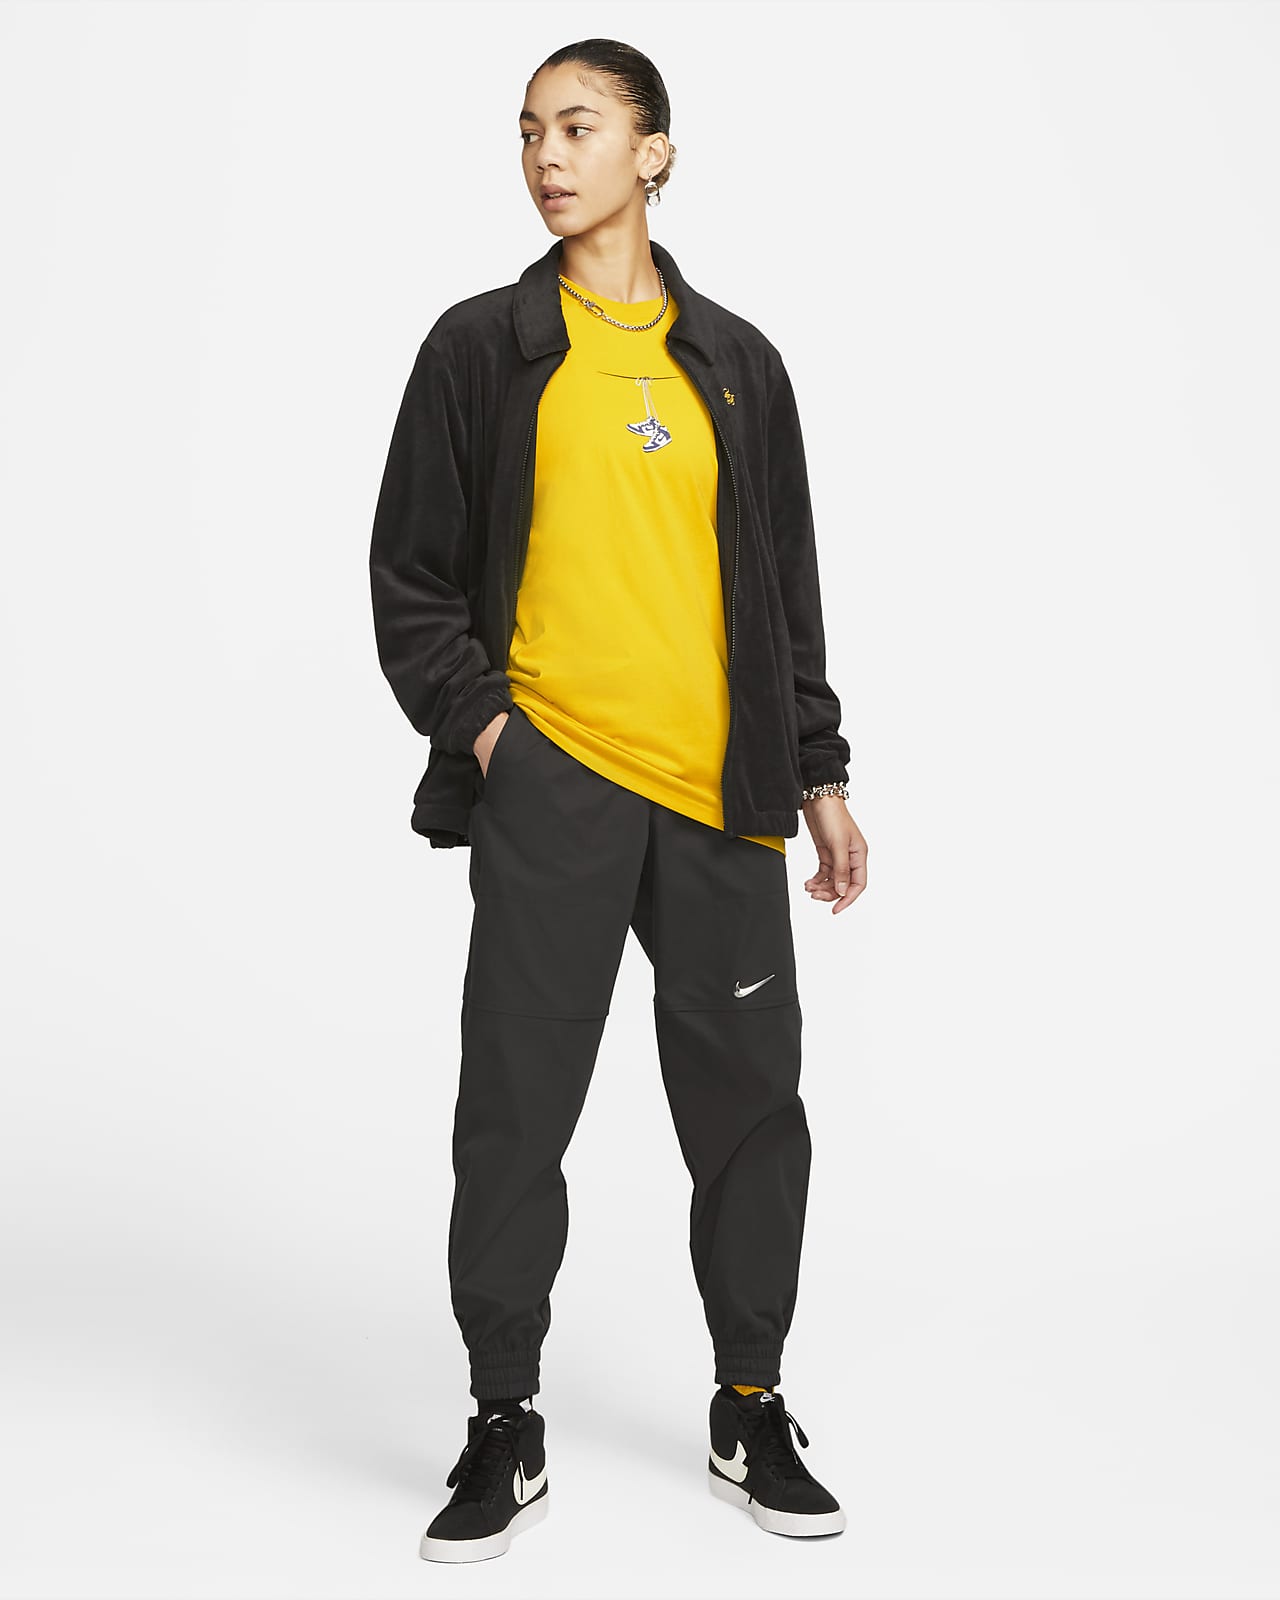 Nike SB Skate Jacket.